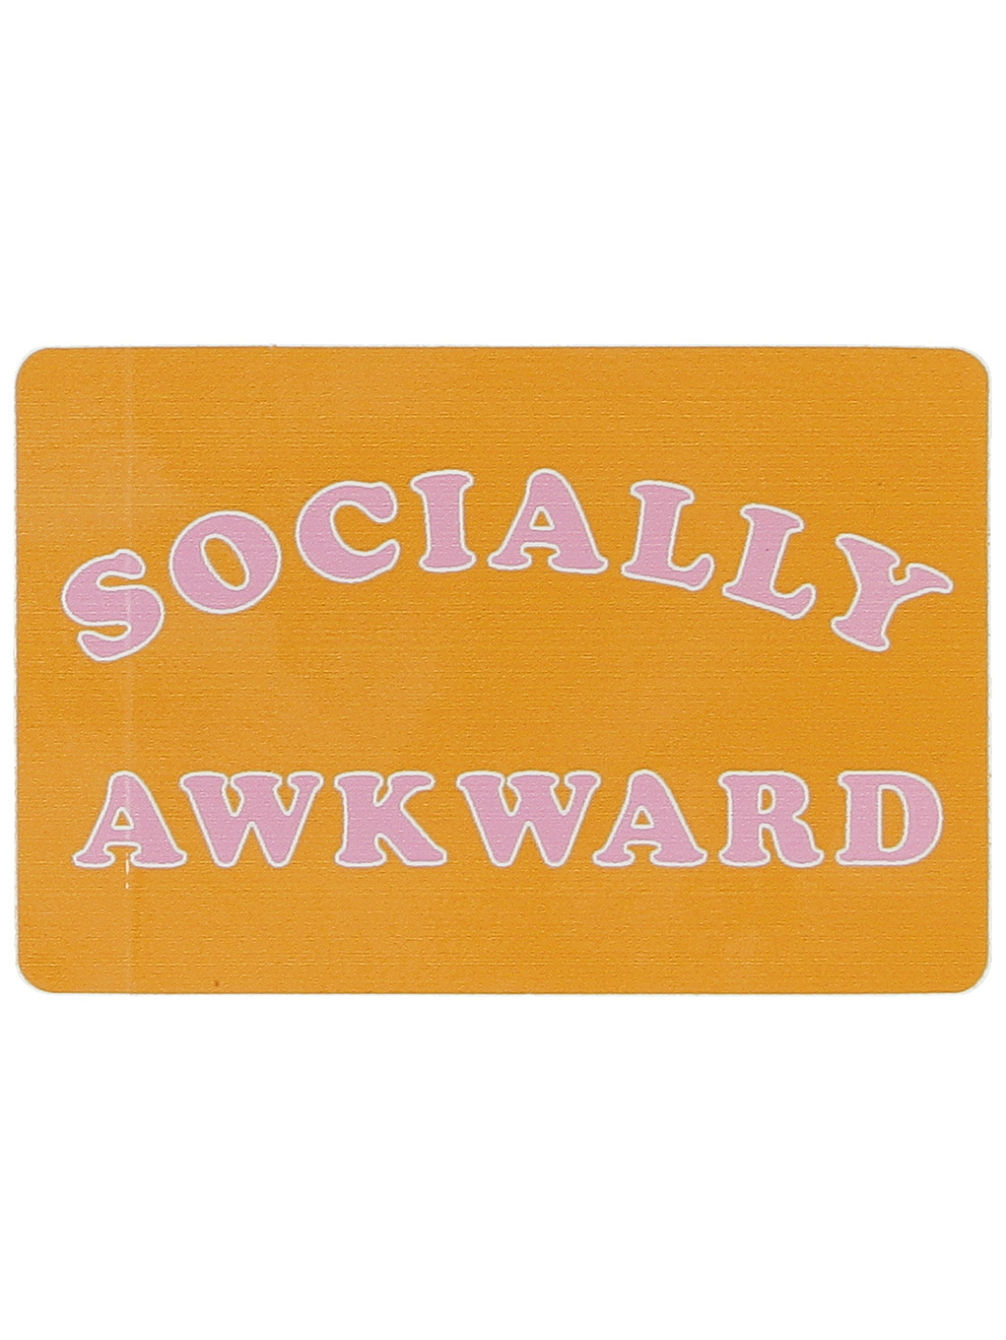 Socially Awkward Klistremerke